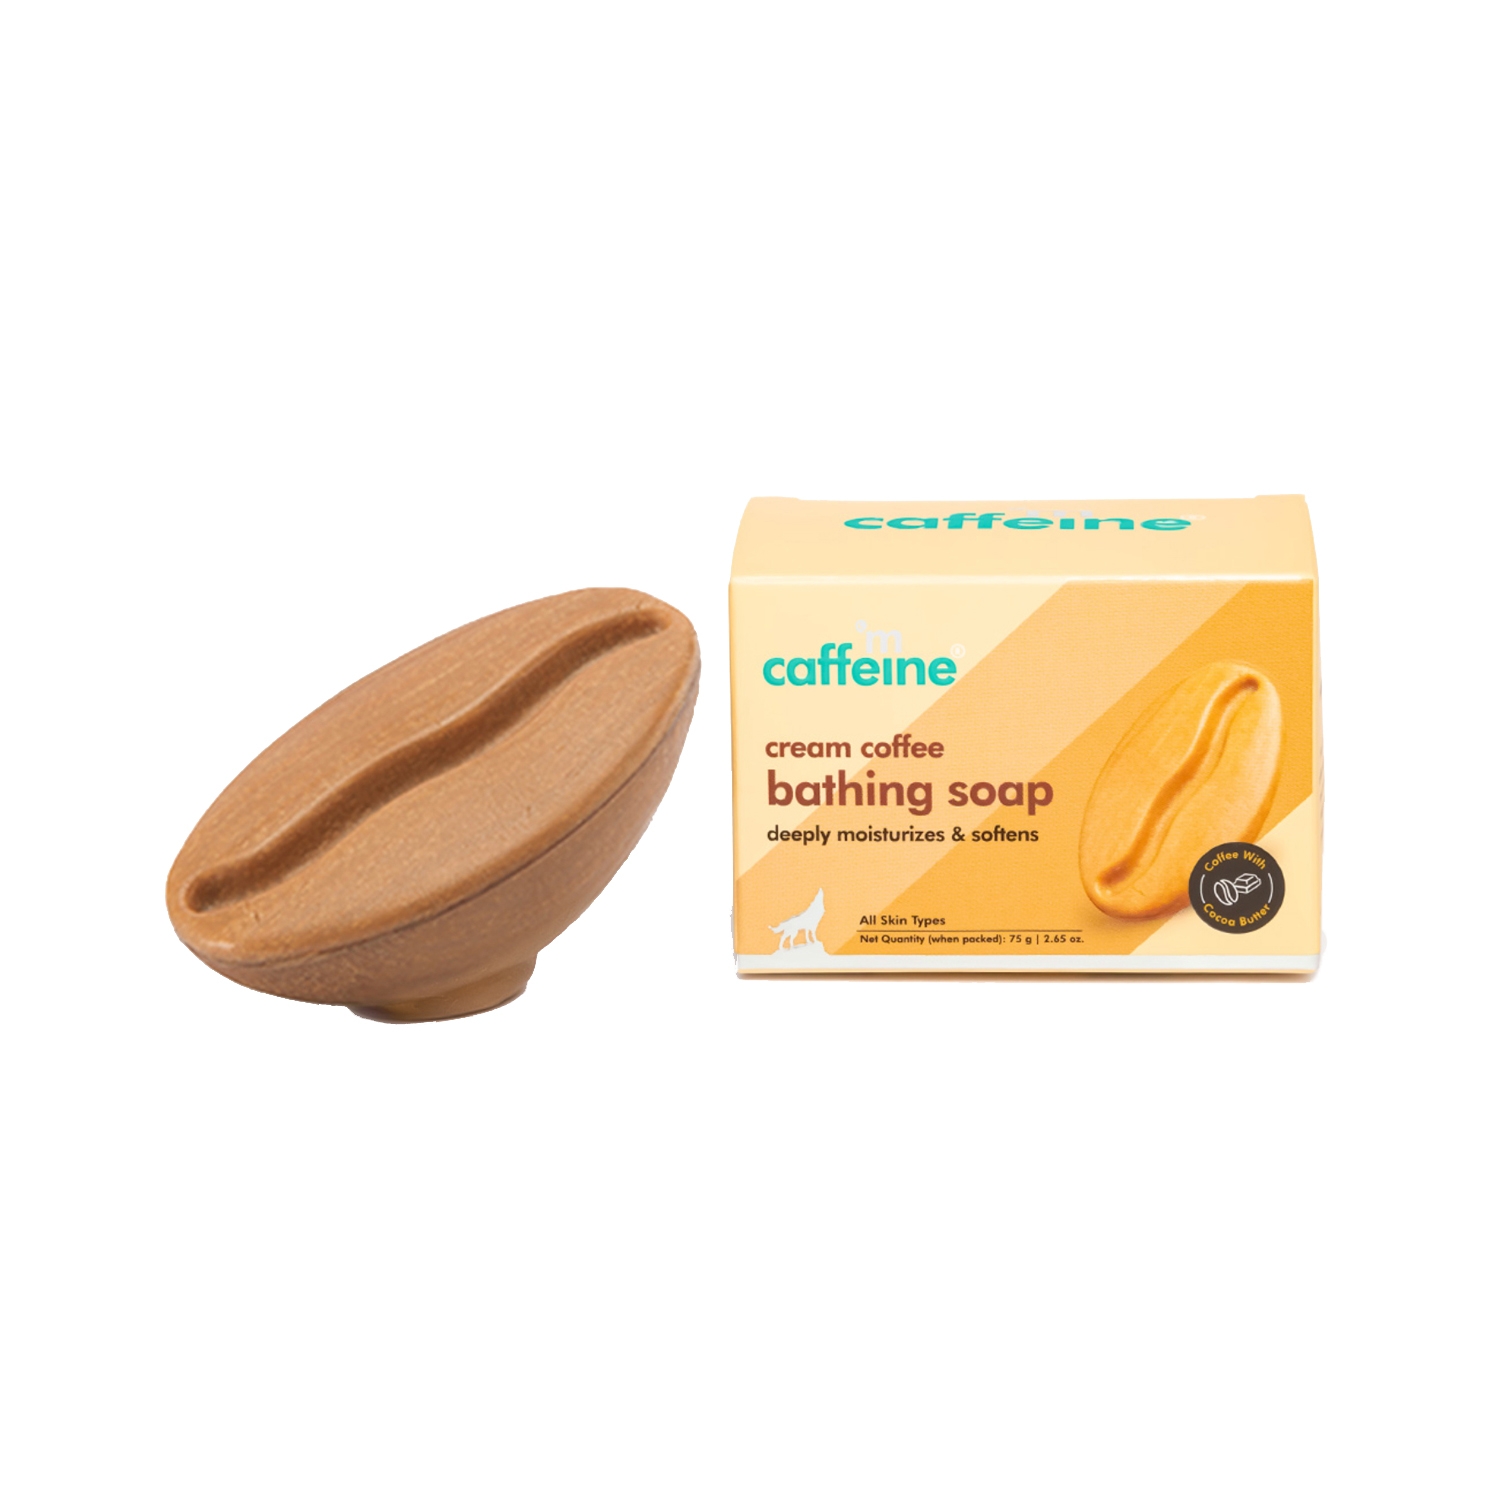 mCaffeine | mCaffeine Cream Coffee Bath Soap with Cocoa Butter & Almond Milk (75g)